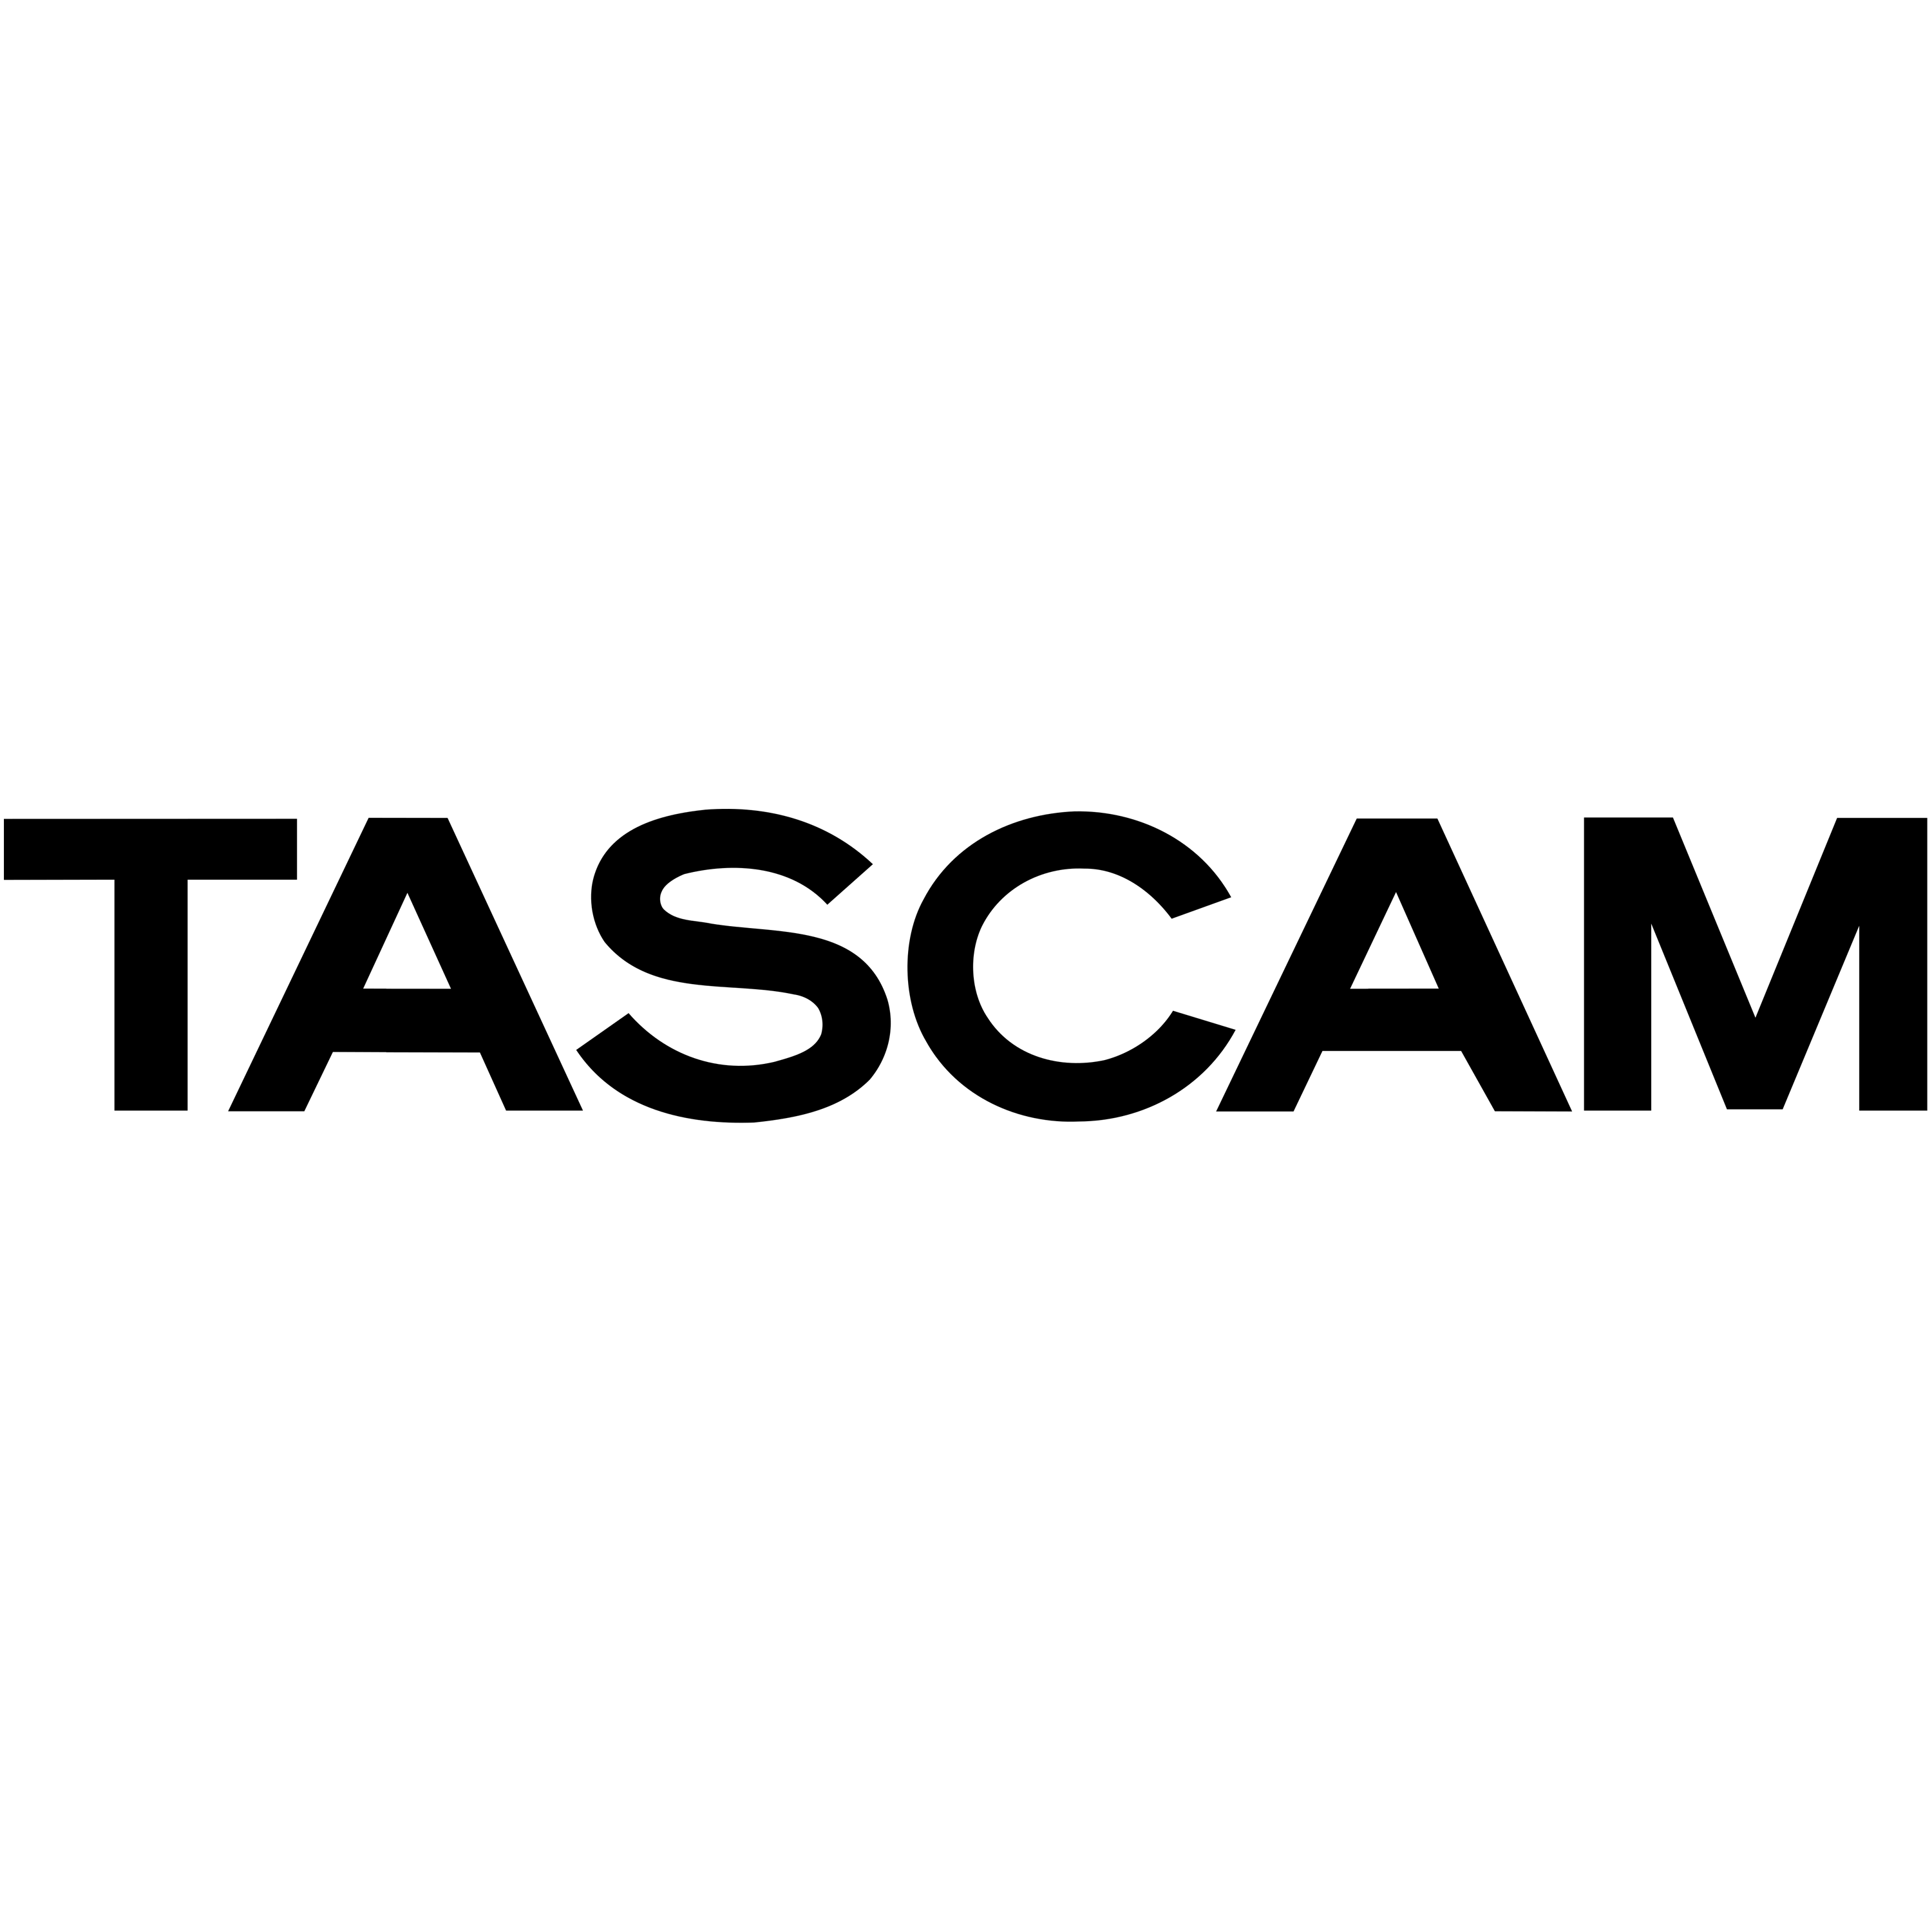 Tascam Logo Black Transparent Image